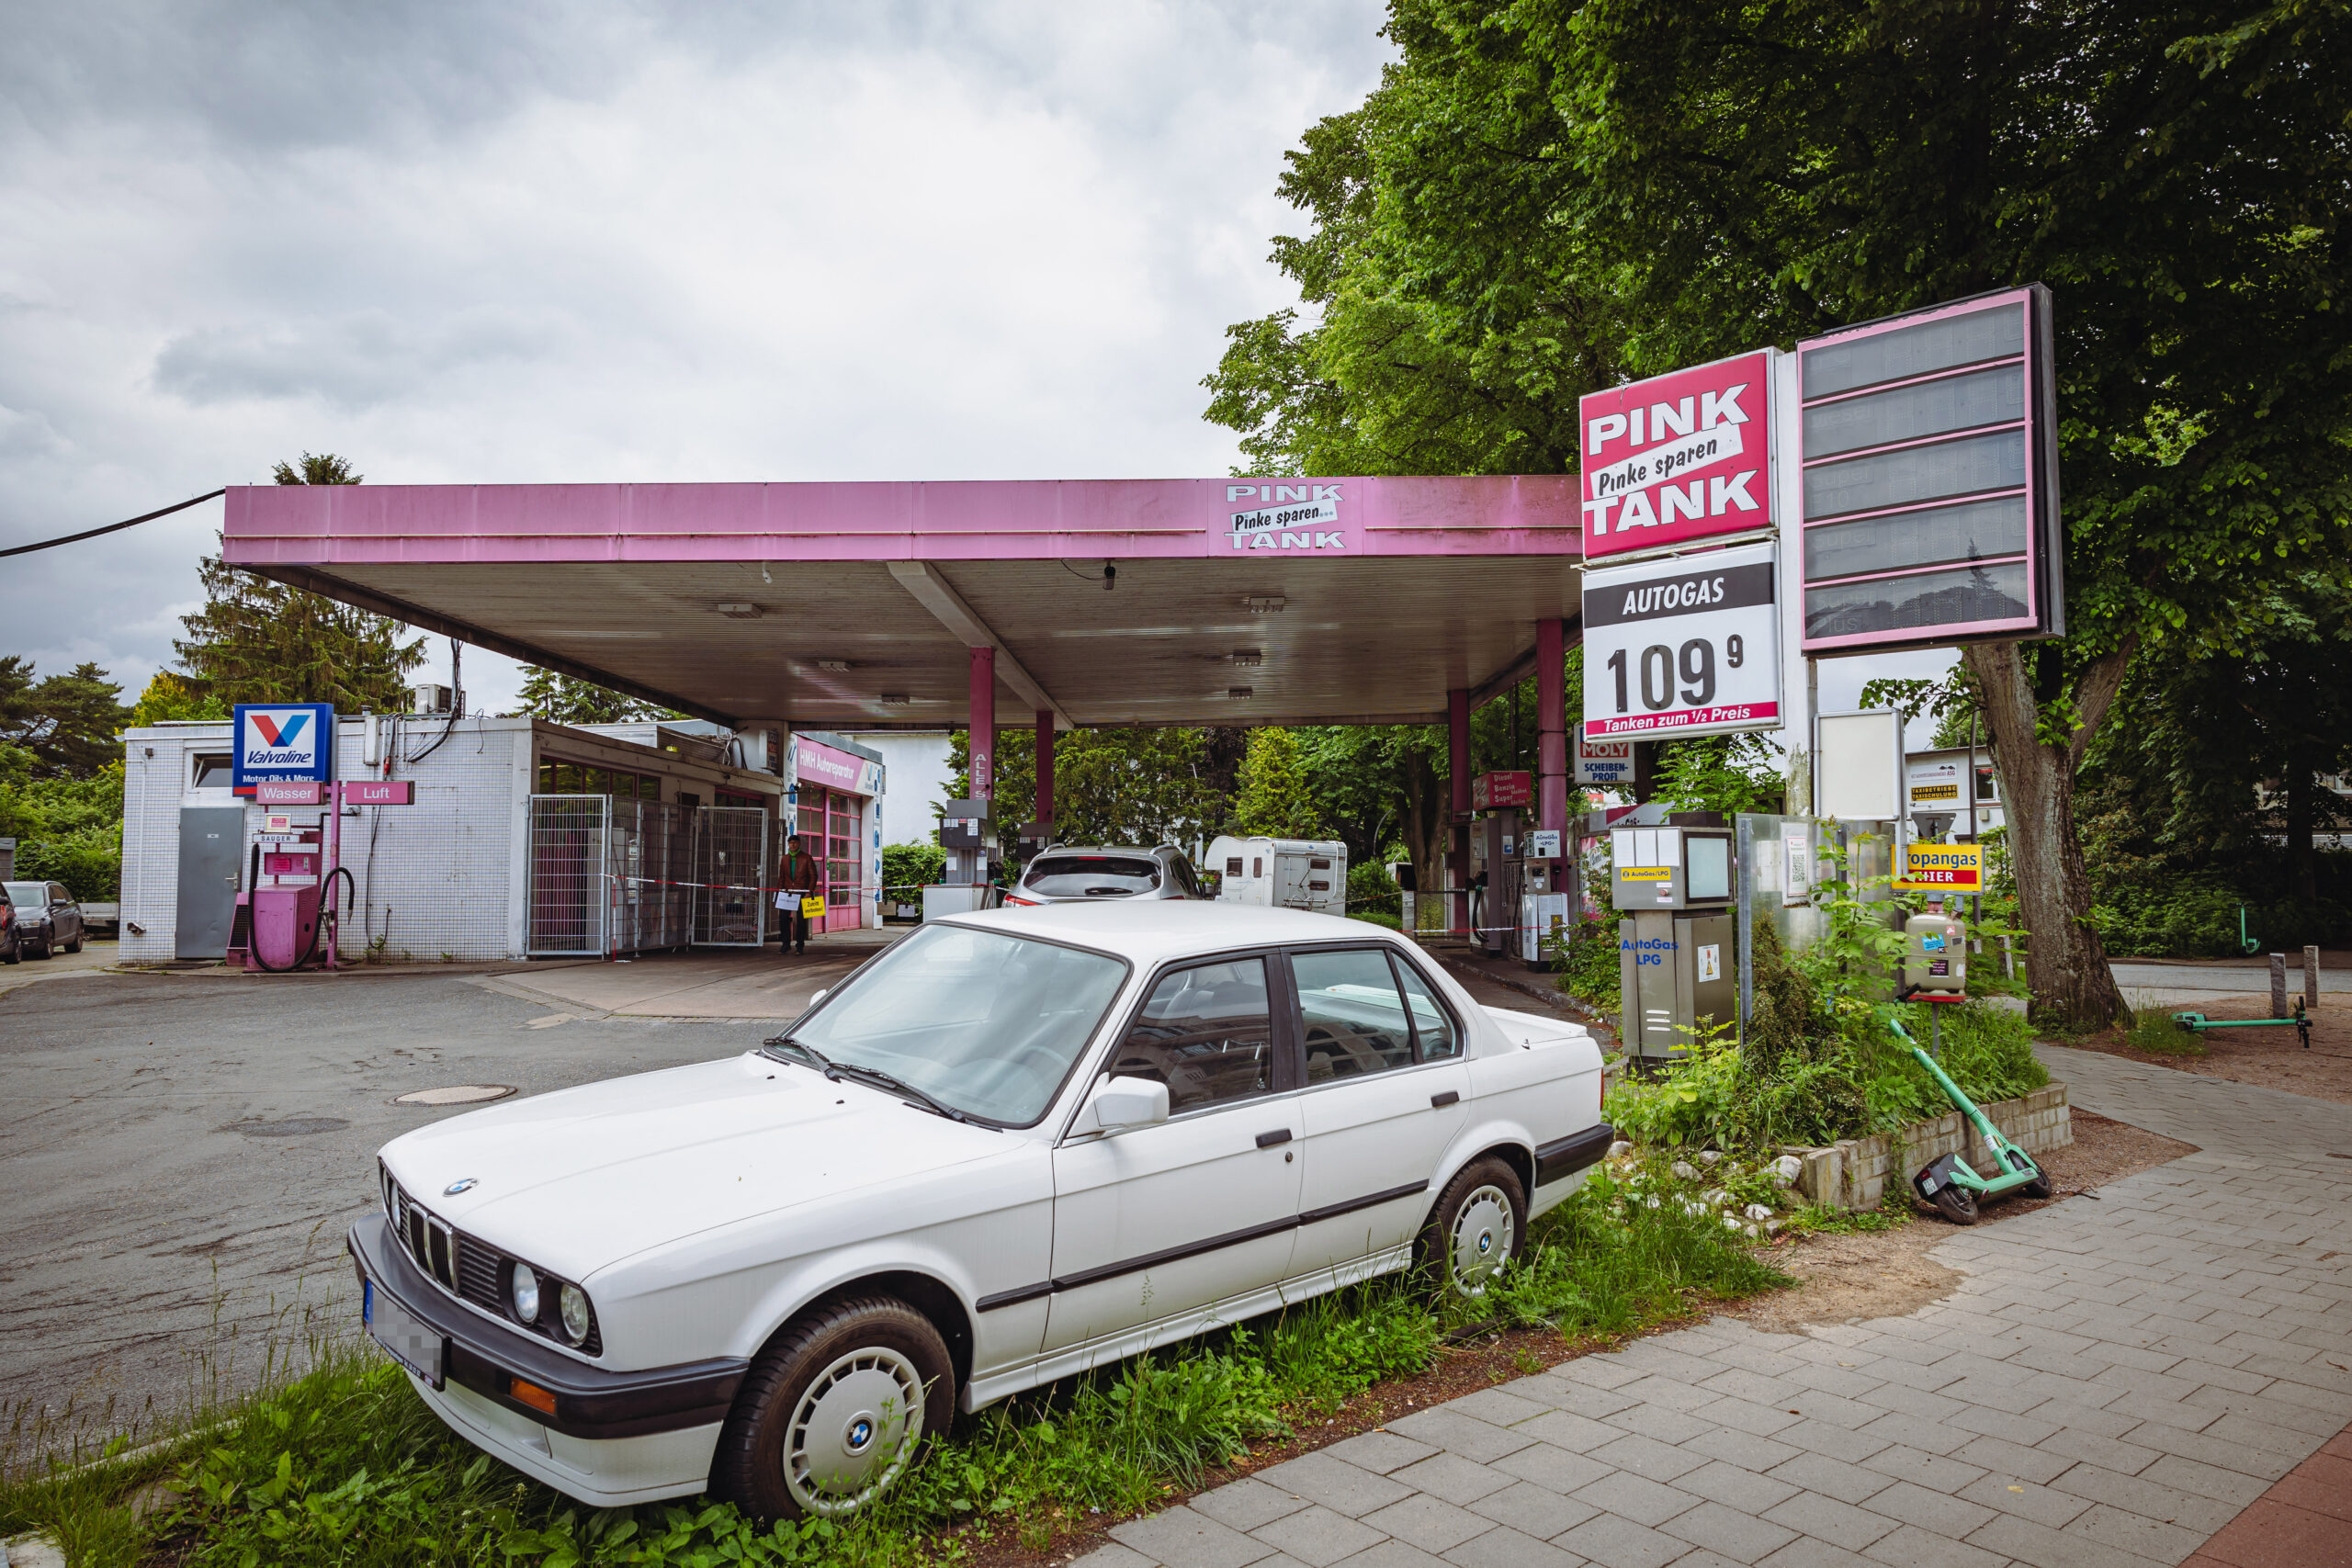 Pinkfarbene Tankstelle mit altem Auto davor